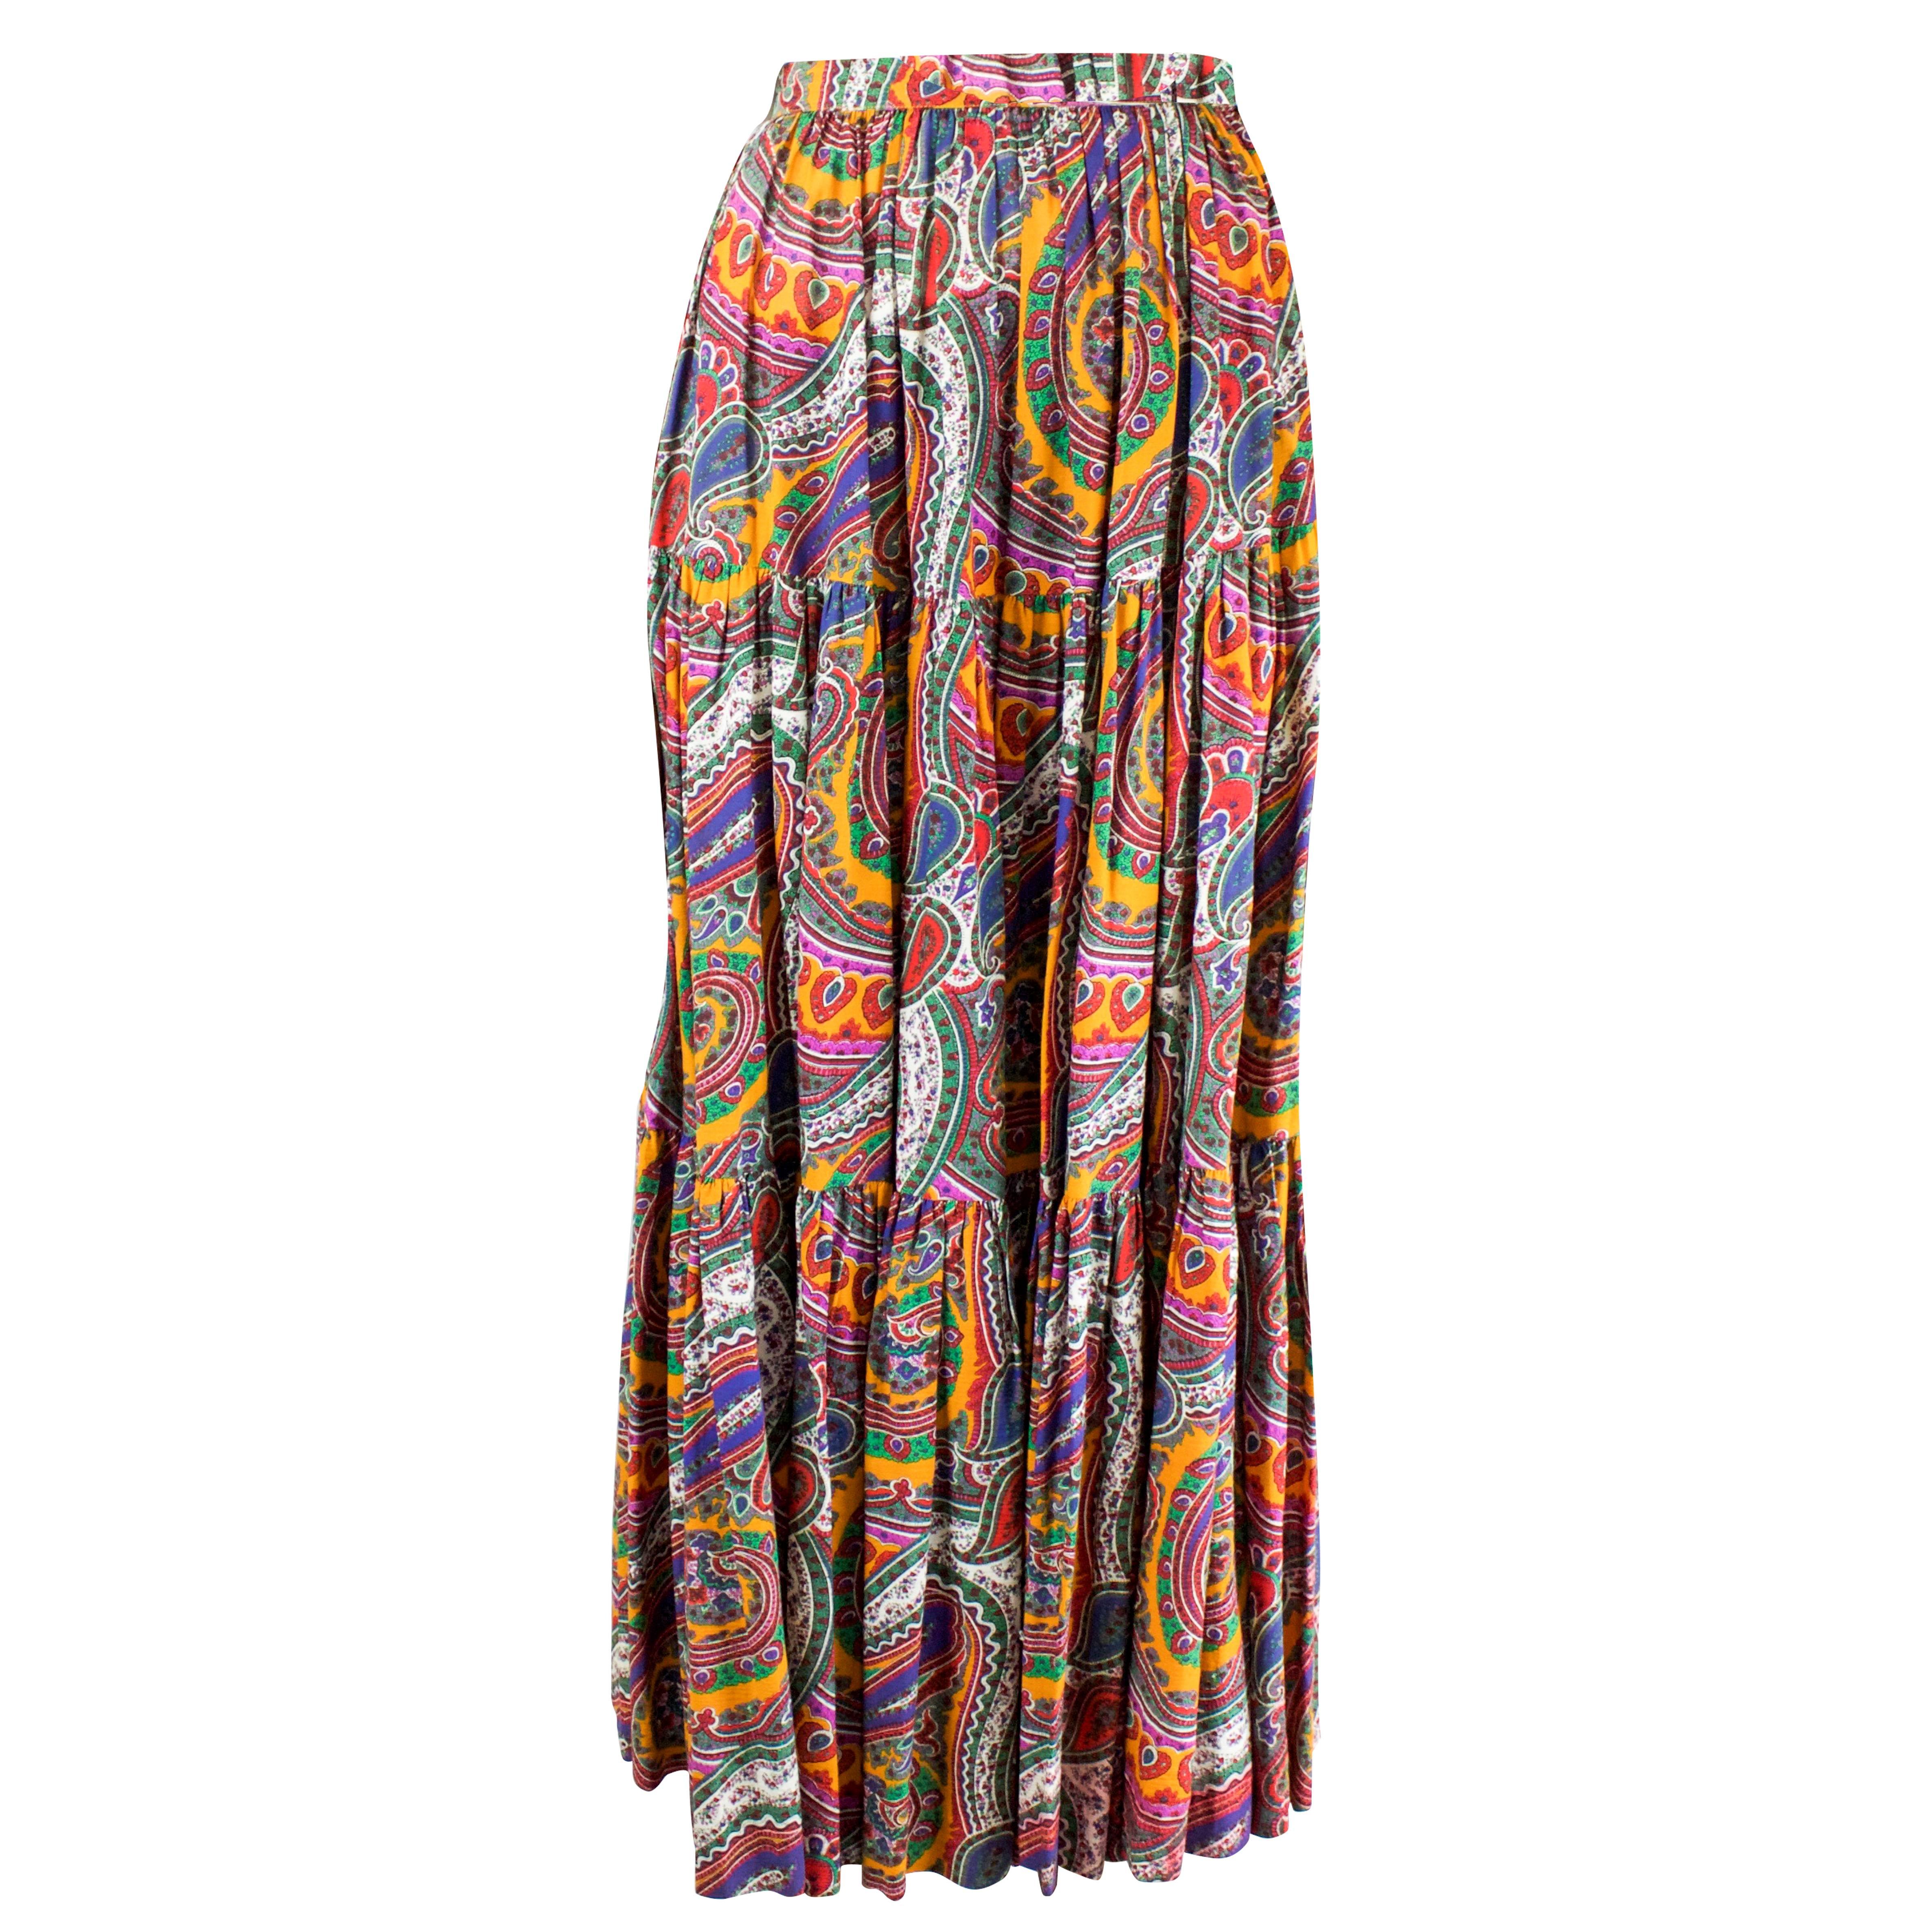 Yves Saint Laurent long layered Paisley gypsy skirt, Fall Winter 1976